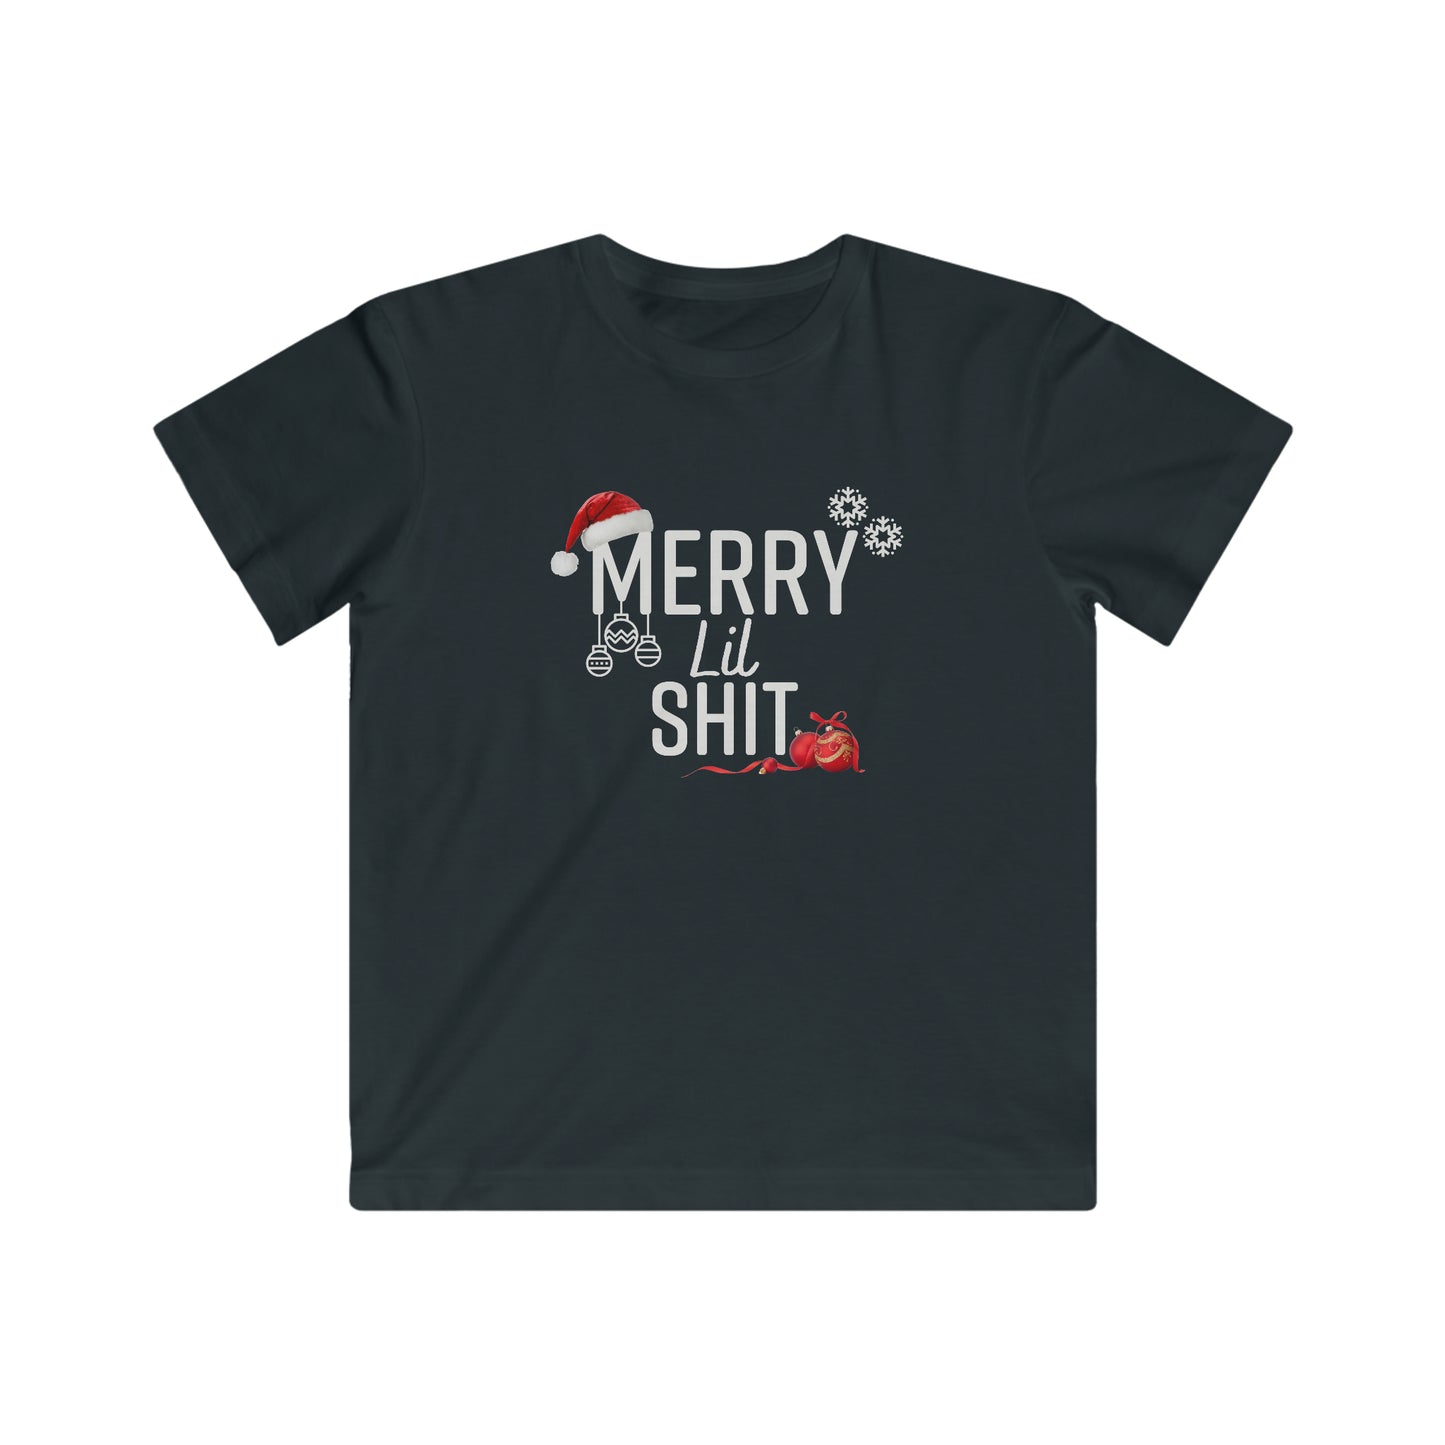 Kids Merry Tee, Kids Christmas Shirt, Kids Holiday Shirt